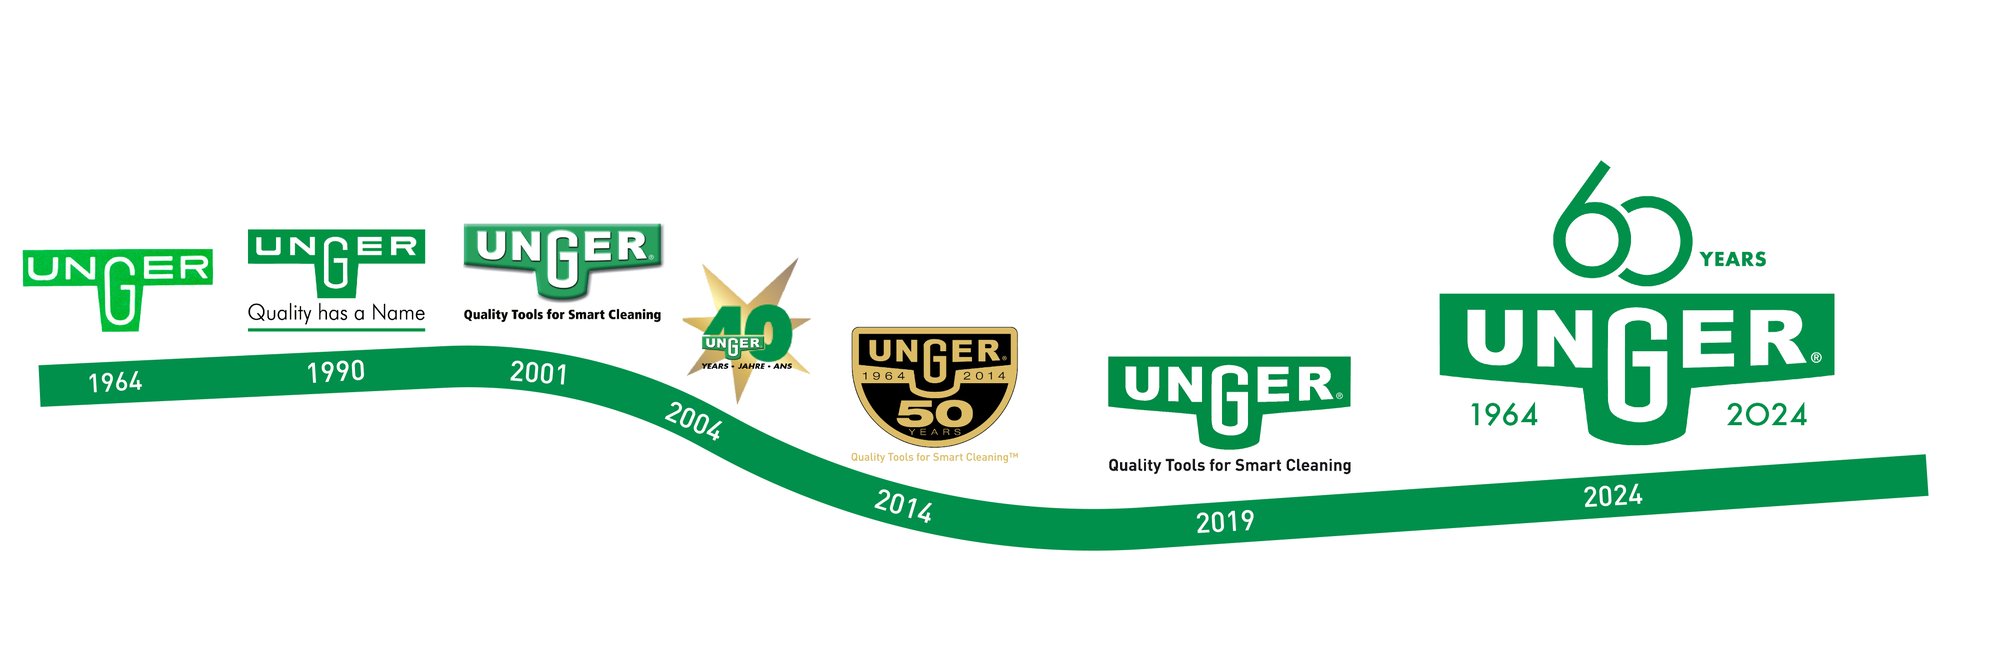 UNGER-Logo-Evolution